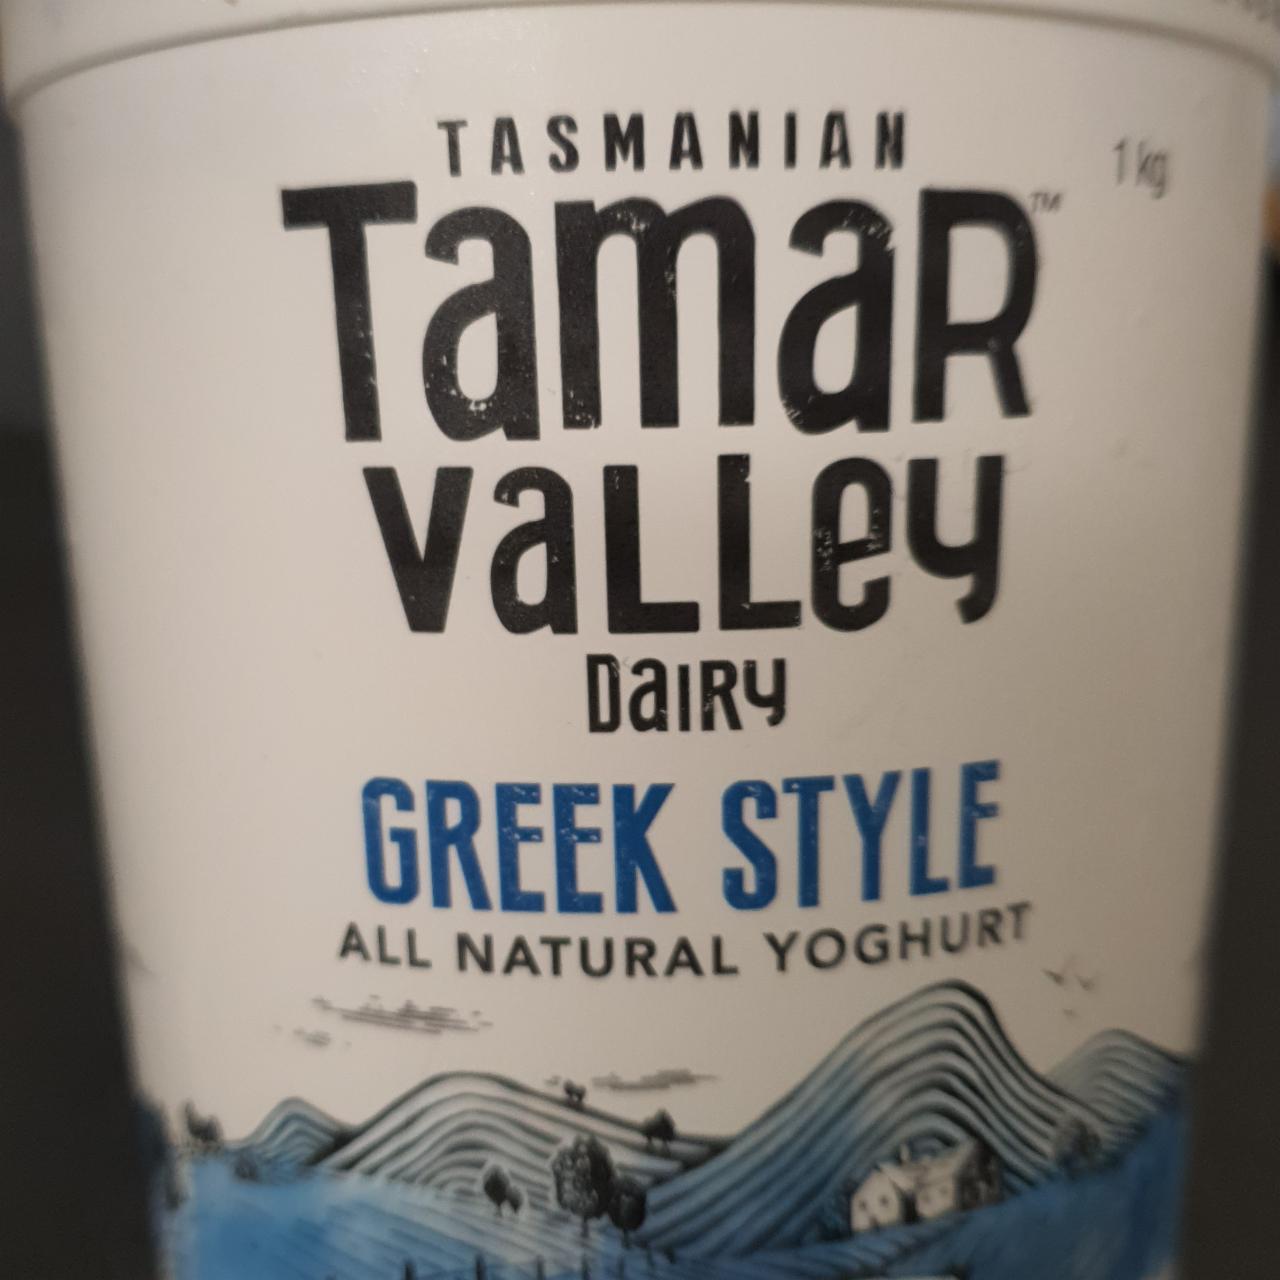 Fotografie - Greek Style All Natural Yoghurt Tamar Valley